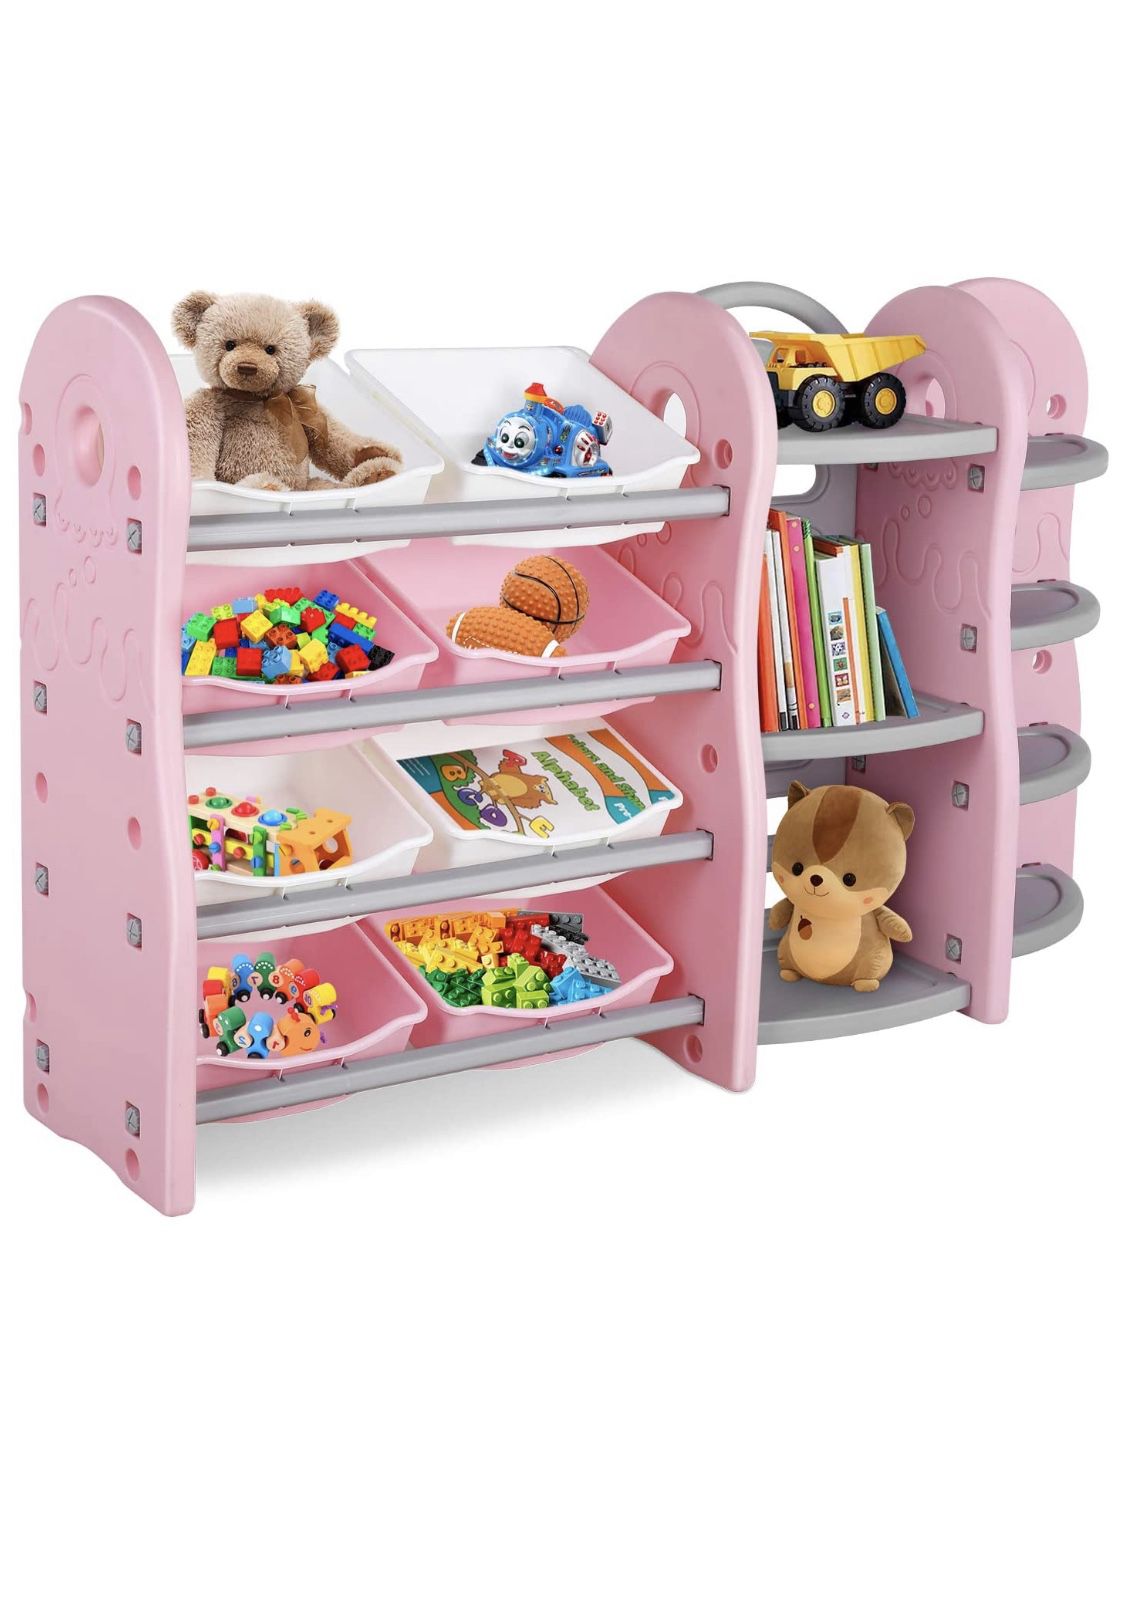 Kids Toys Shelf Organization 